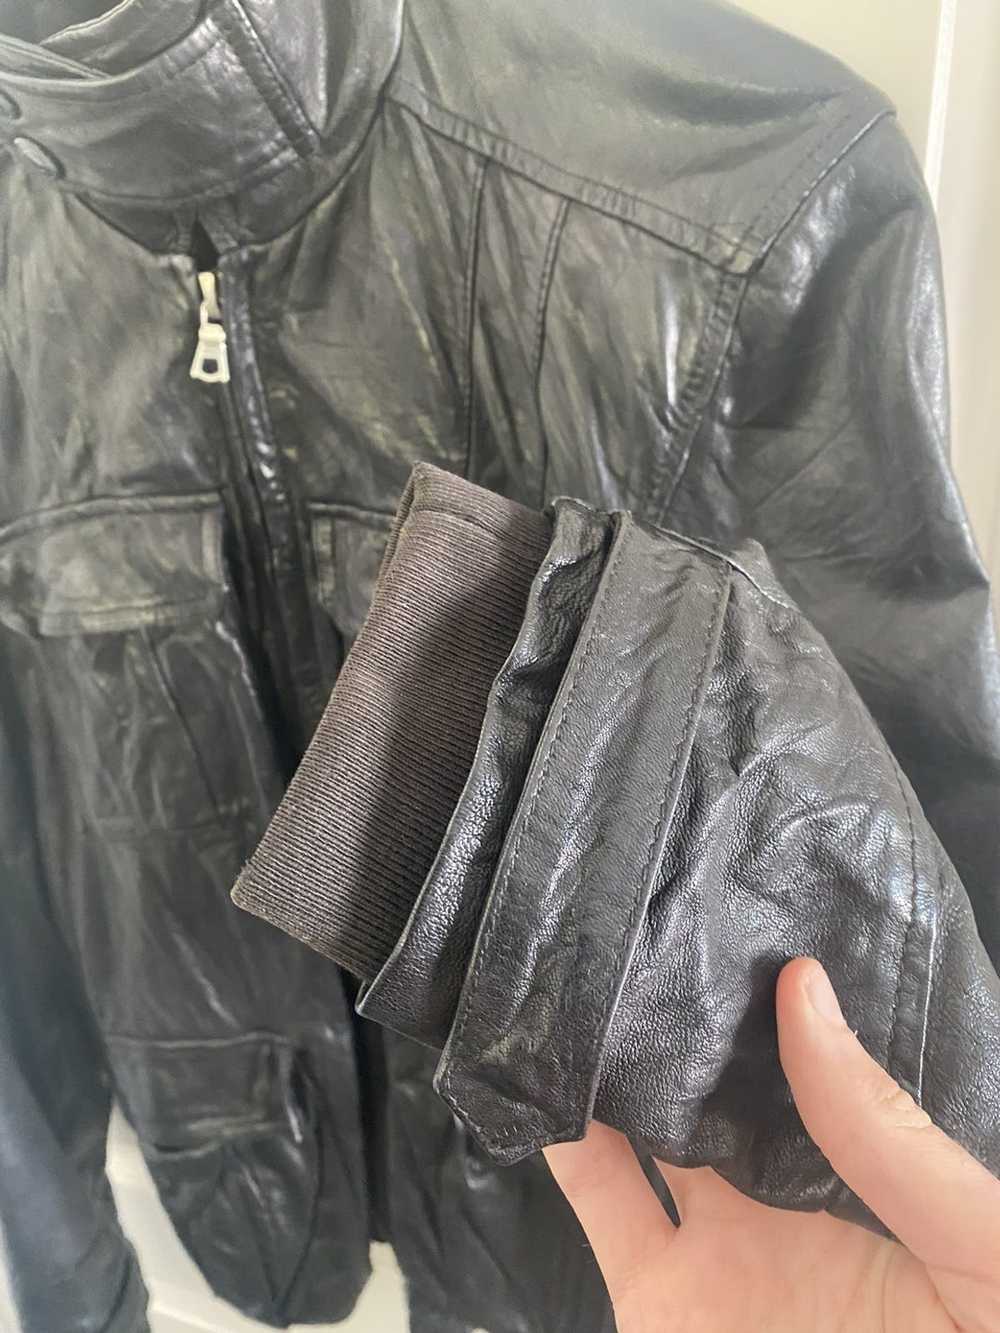 Japanese Brand Trick or Treat Black Leather Jacket - image 3